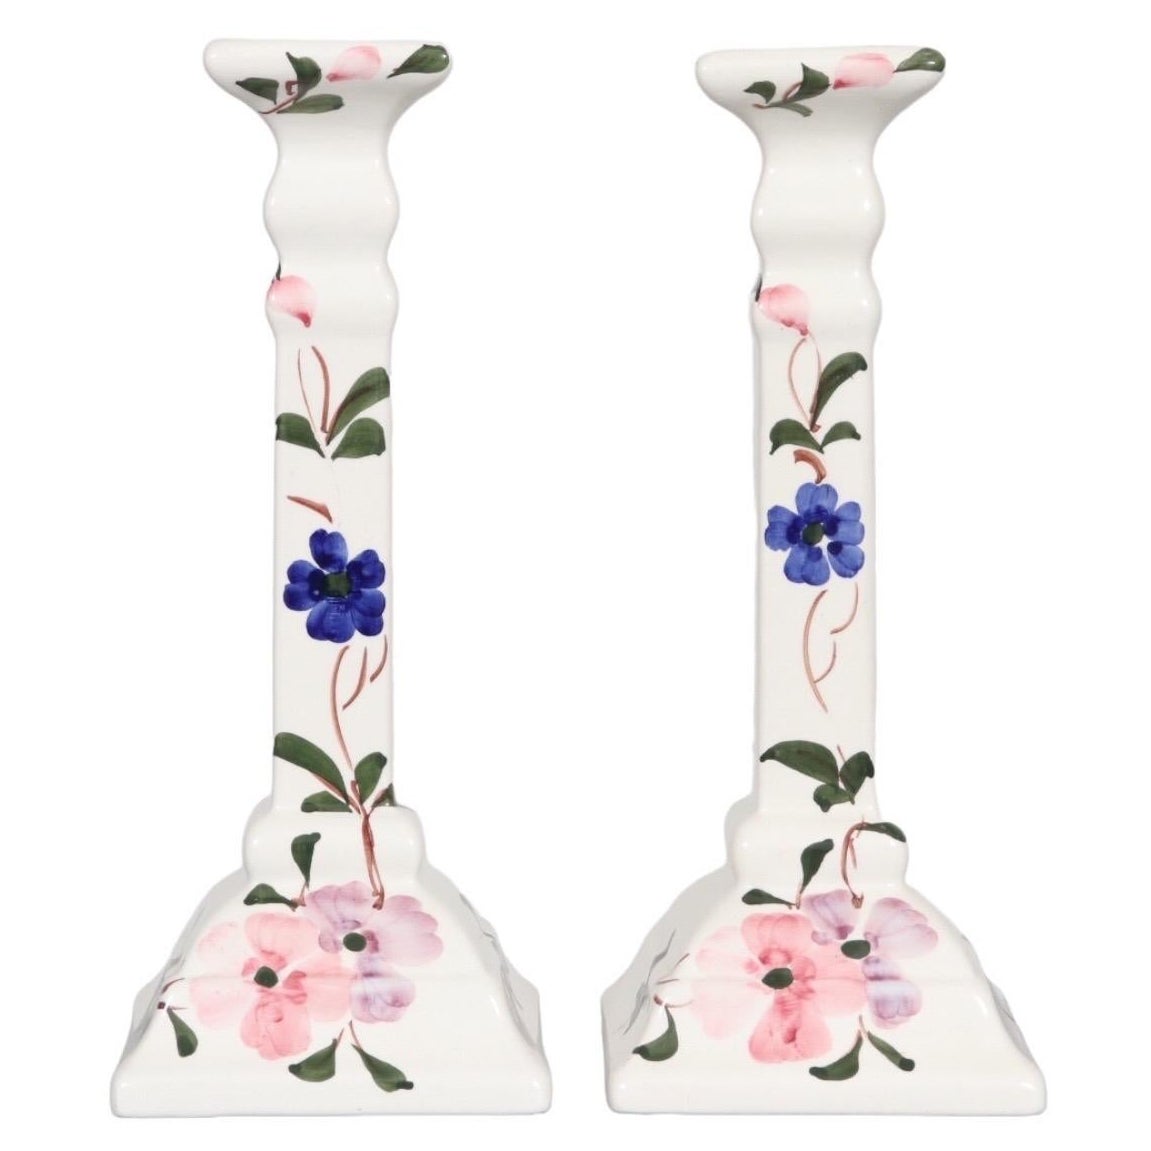 Portuguese Floral Ceramic Candlestick Holders, a Pair